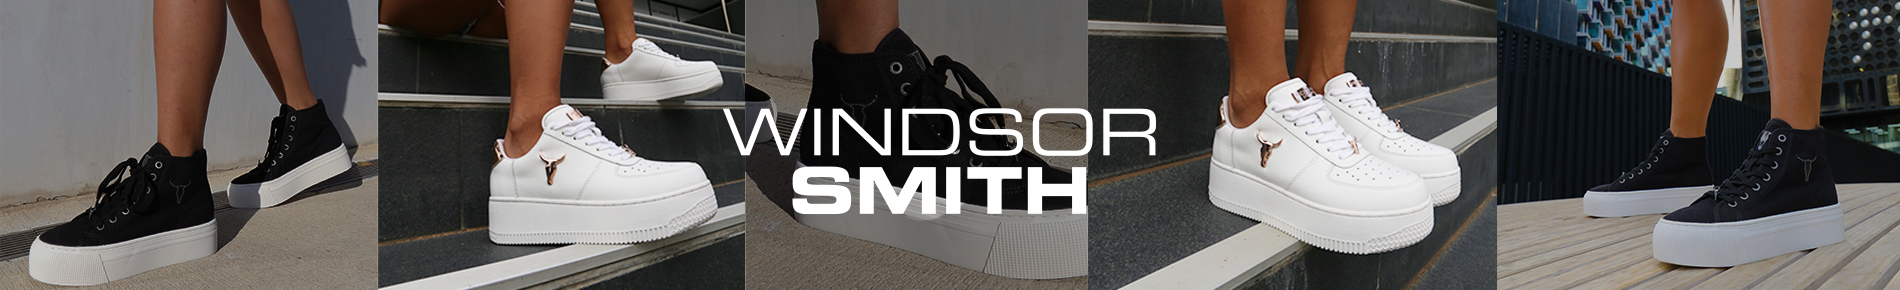 Windsor Smith | Buy Windsor Smith Shoes 